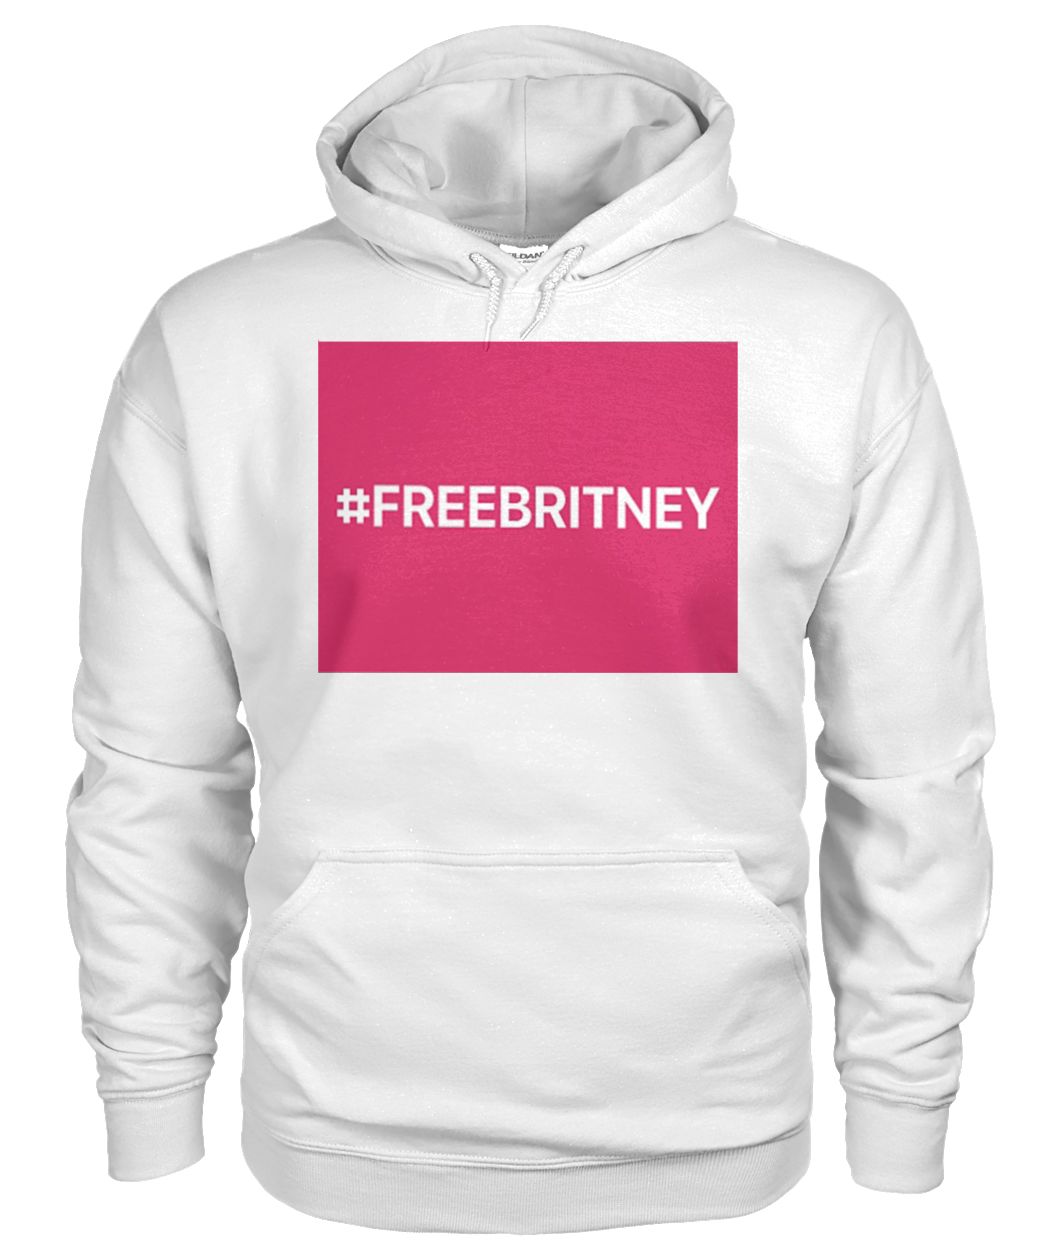 Free britney #freebritney gildan hoodie